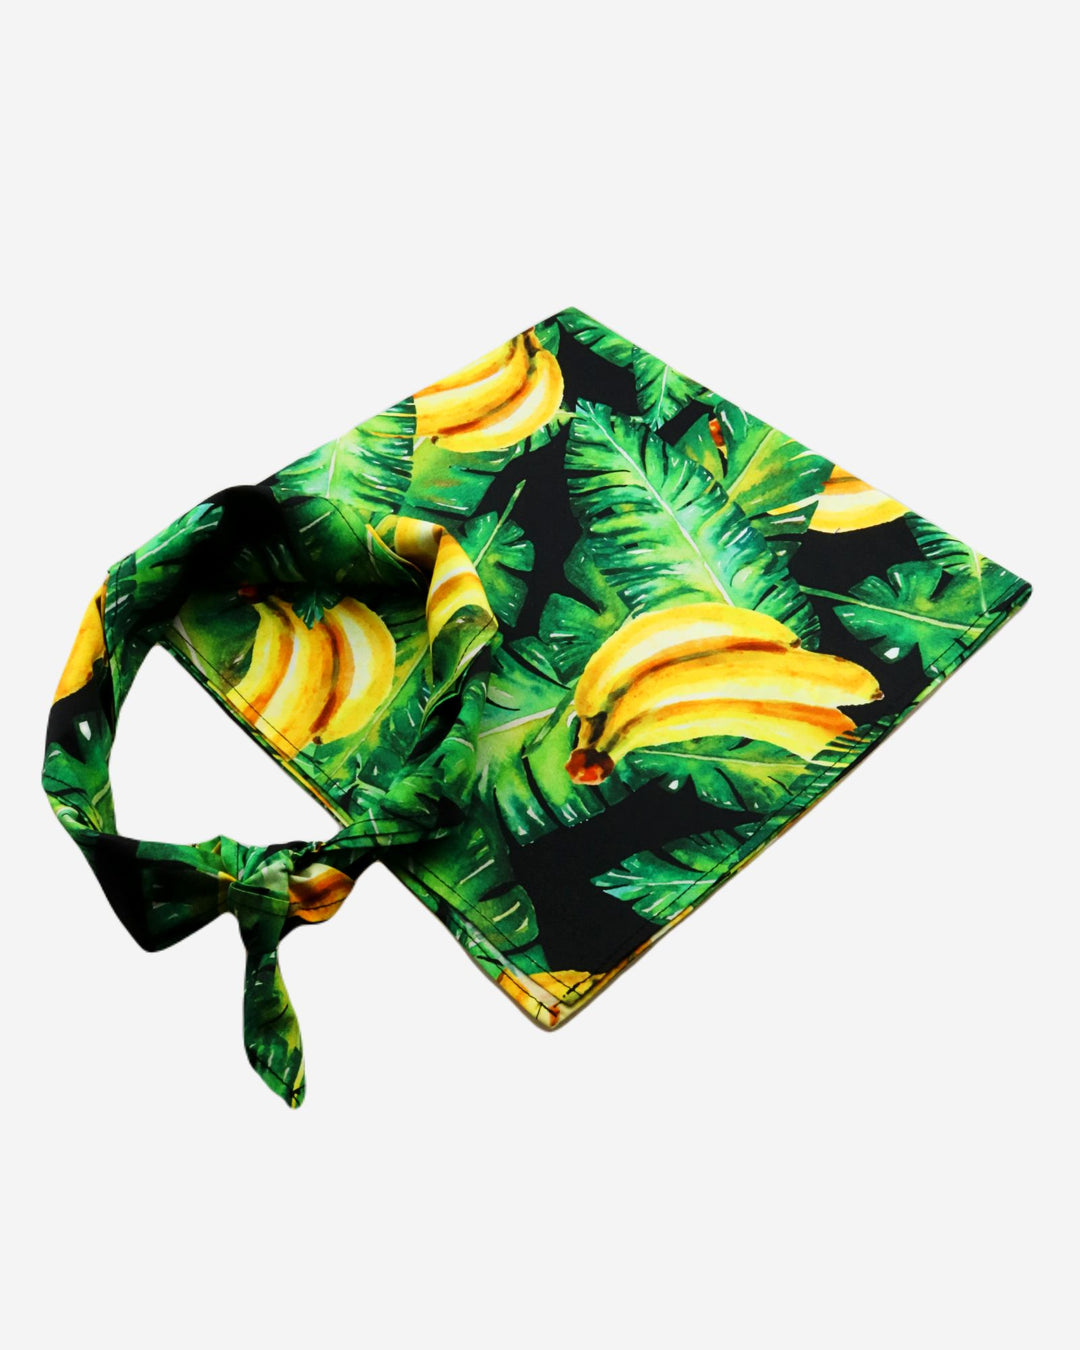 Green bandana with bananas on leaves